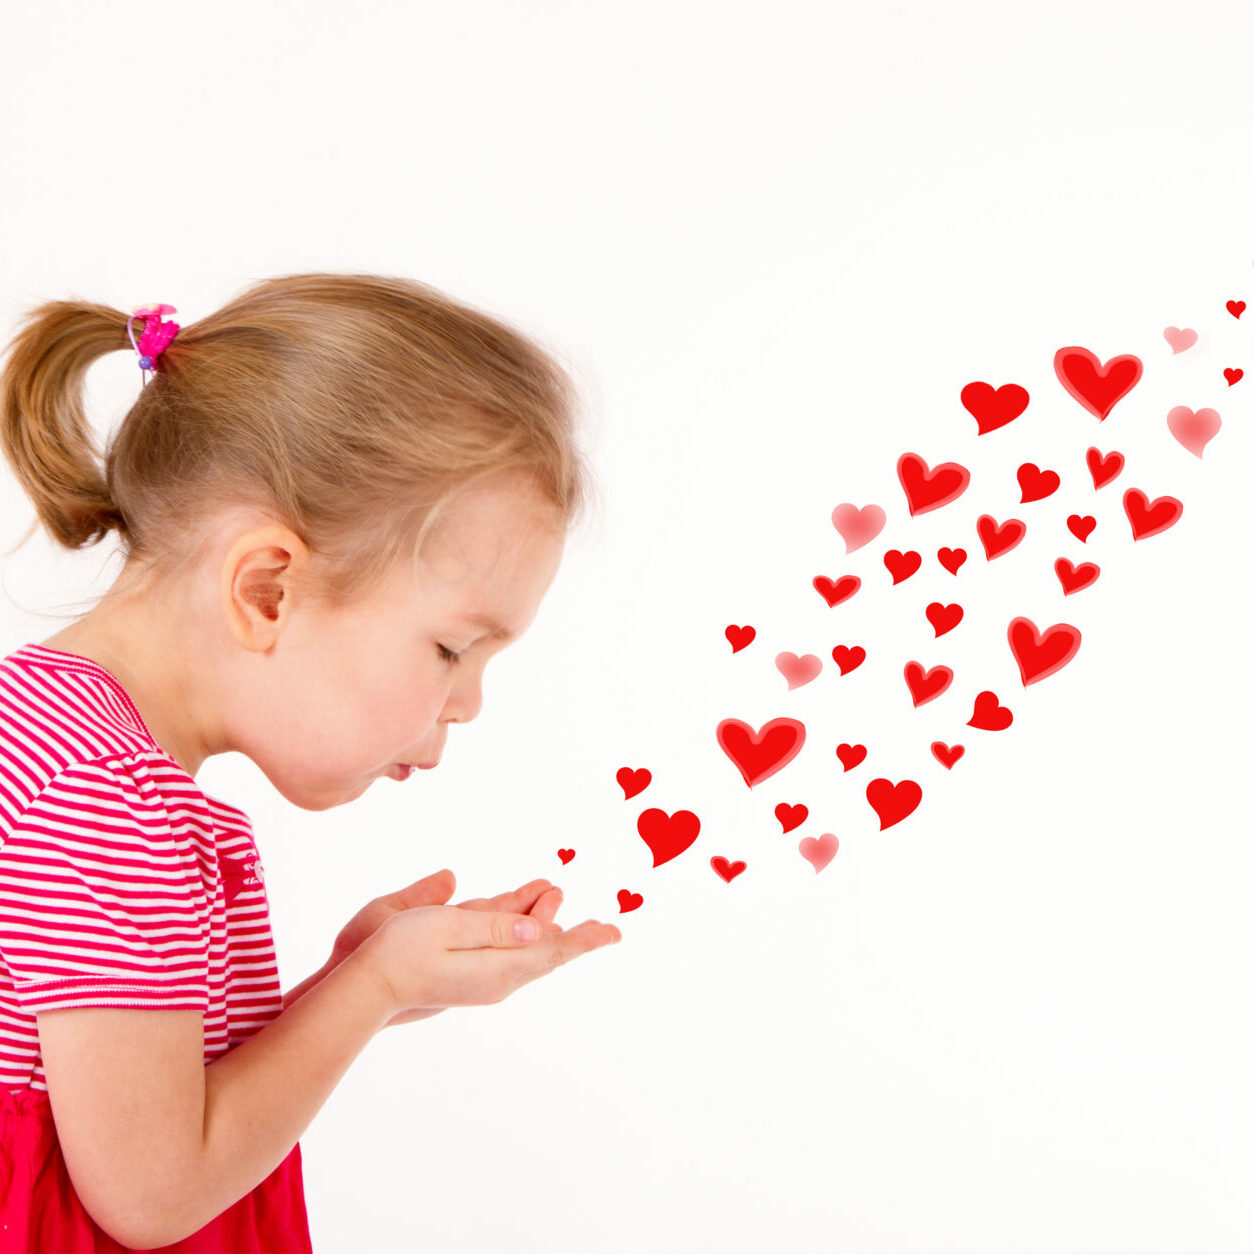 little cute girl a good 4 years, send a kiss - drawn hearts. love, valentine's day concept